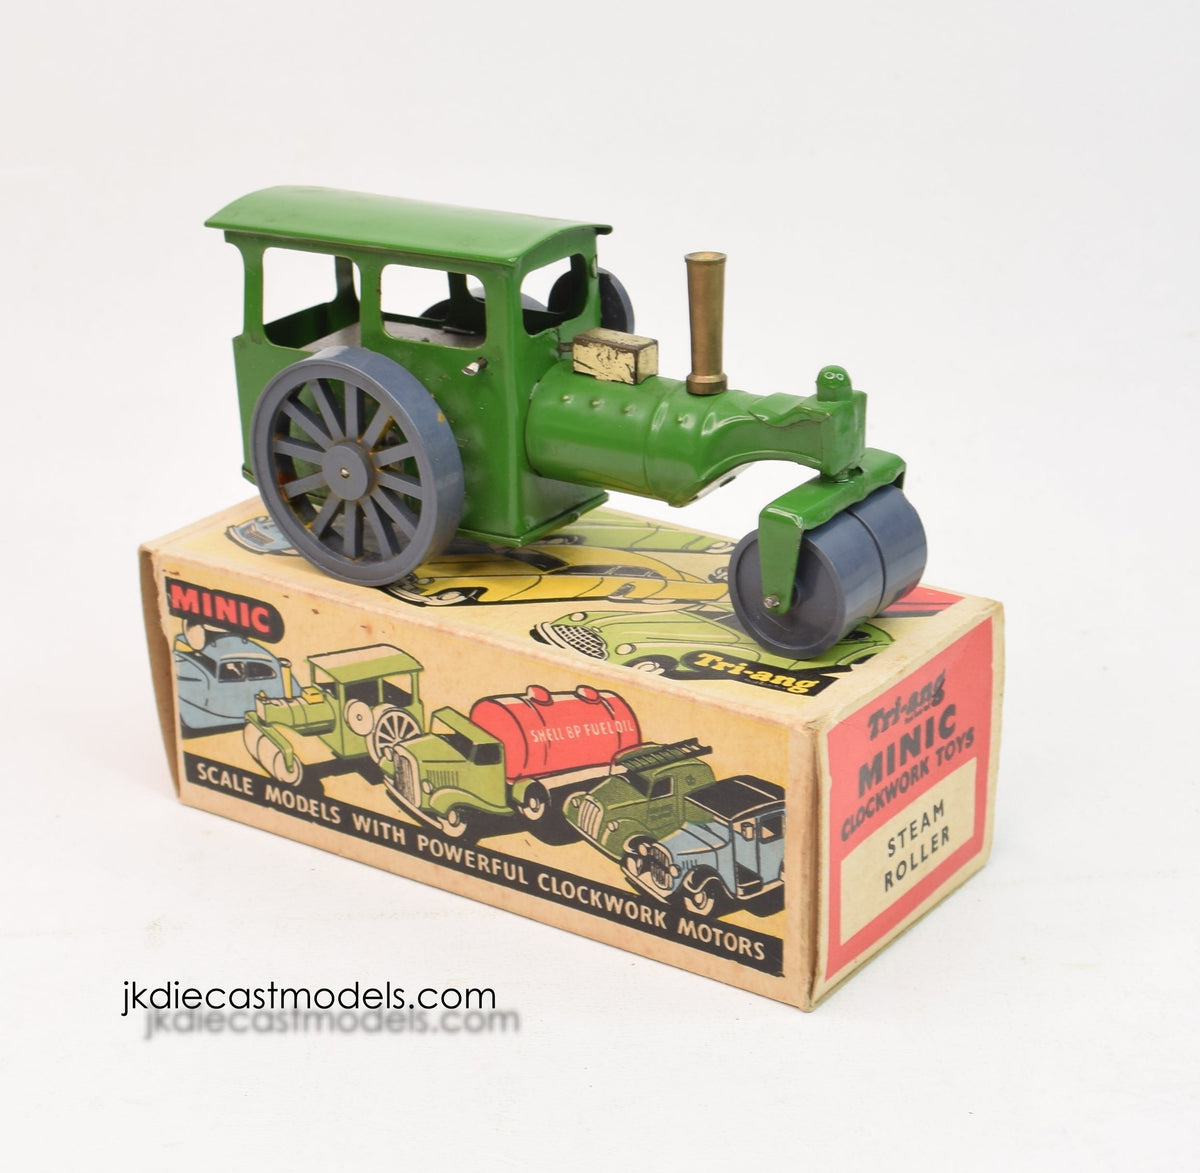 Steam Roller - DK Toys